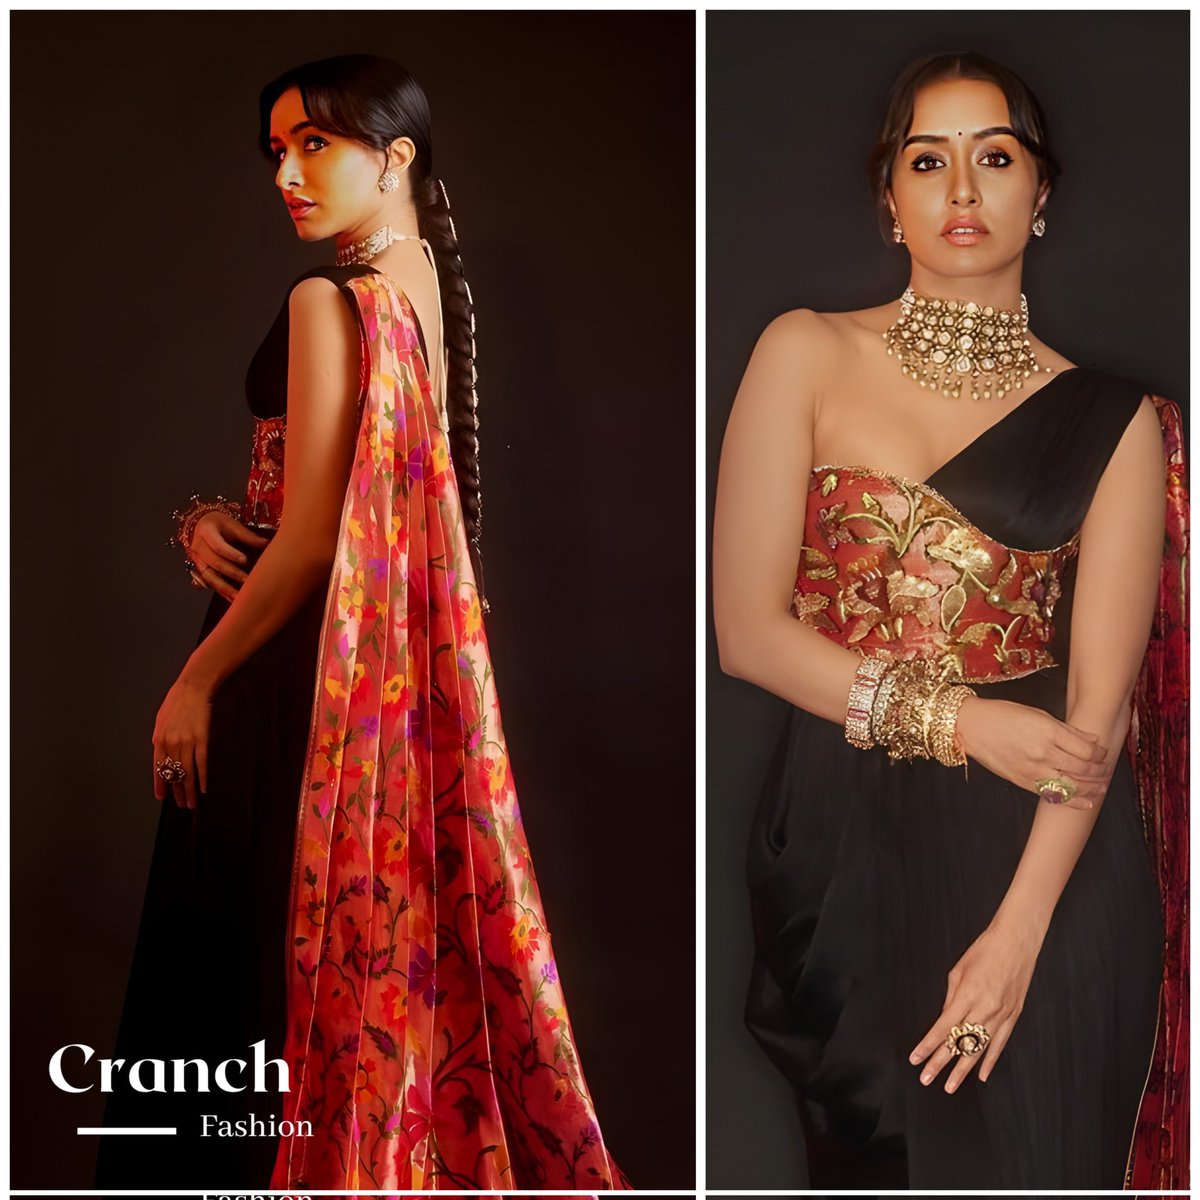 So pretty @ShraddhaKapoor ⚡❤️
...
😉
....
#cranchfashion #shraddhakapoor #shraddhakapoorfans #fashionstyle #stylediaries #nmacc